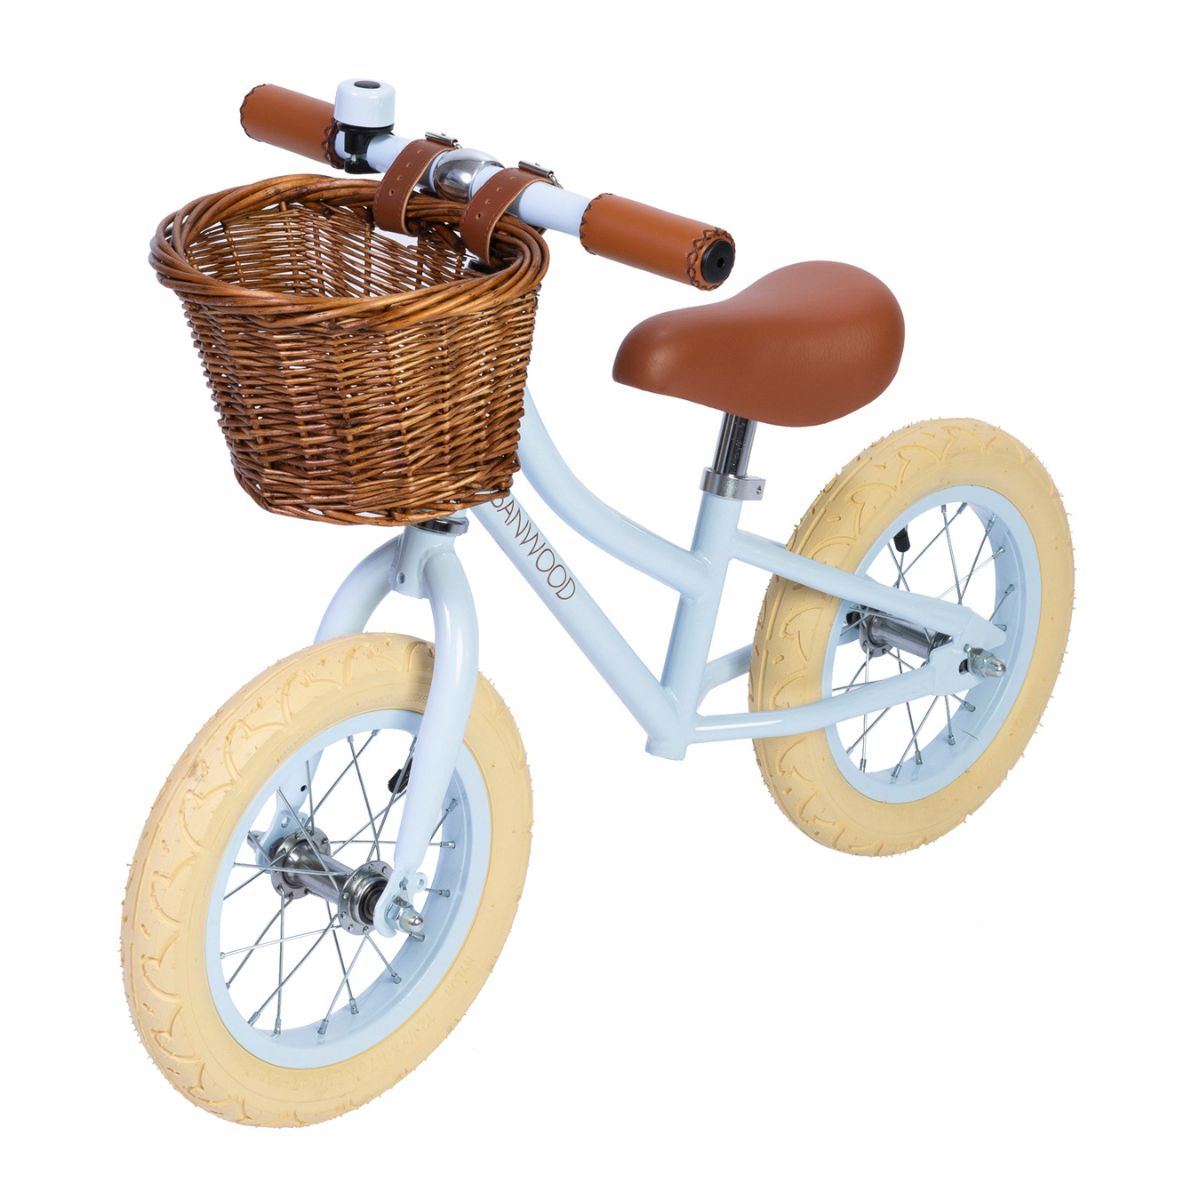 Bicicleta sin pedales Banwood vintage crema